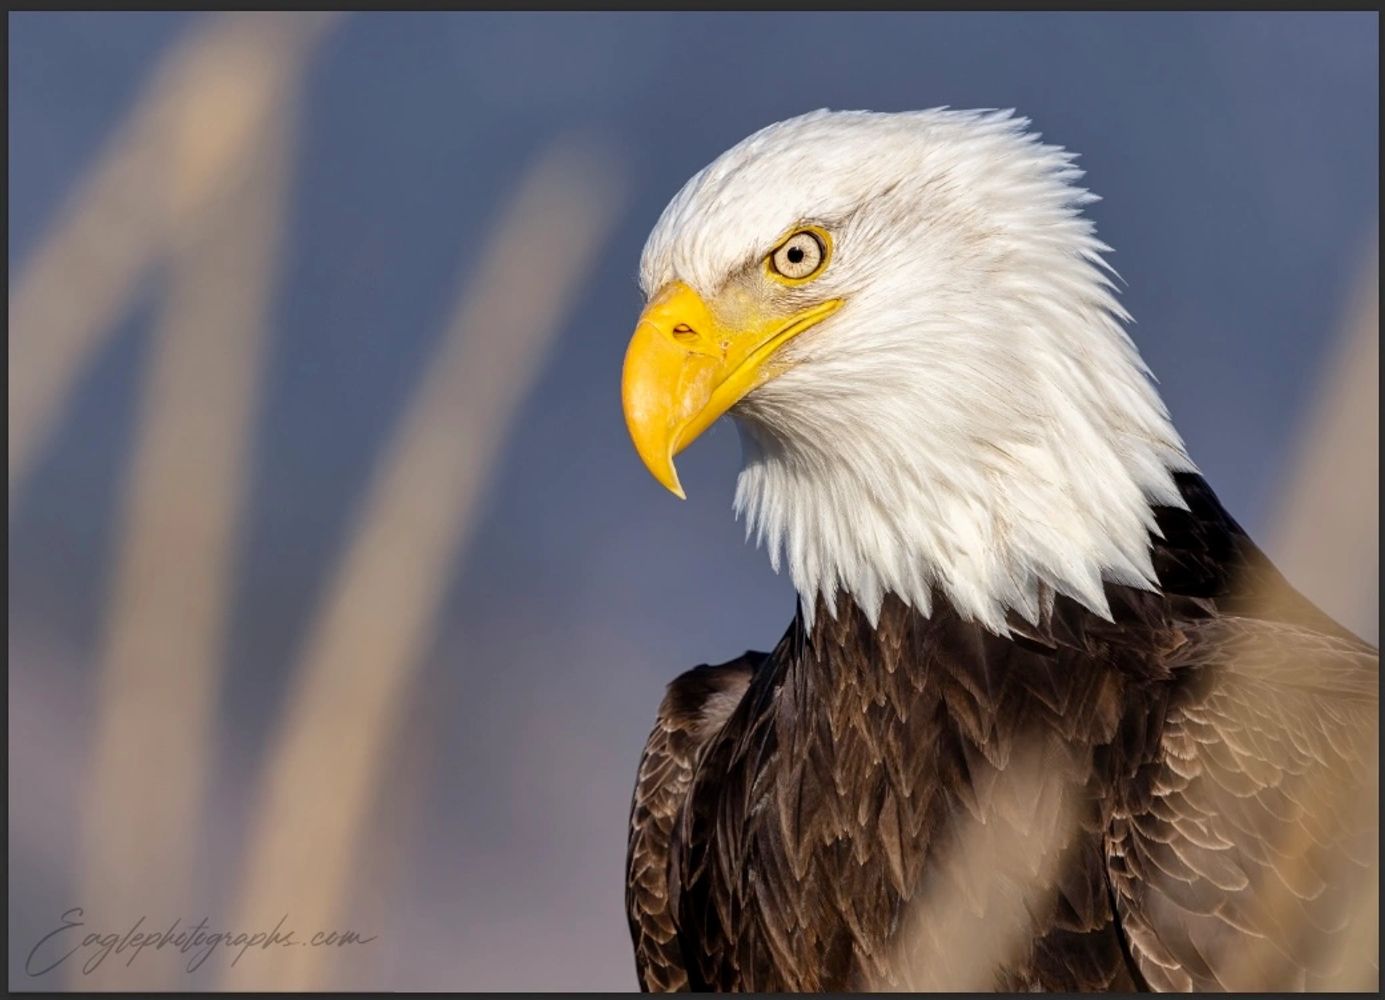 Bald eagle (Haliaeetus leucocephalus) photographed in Alaska by Malcolmn Ramsey